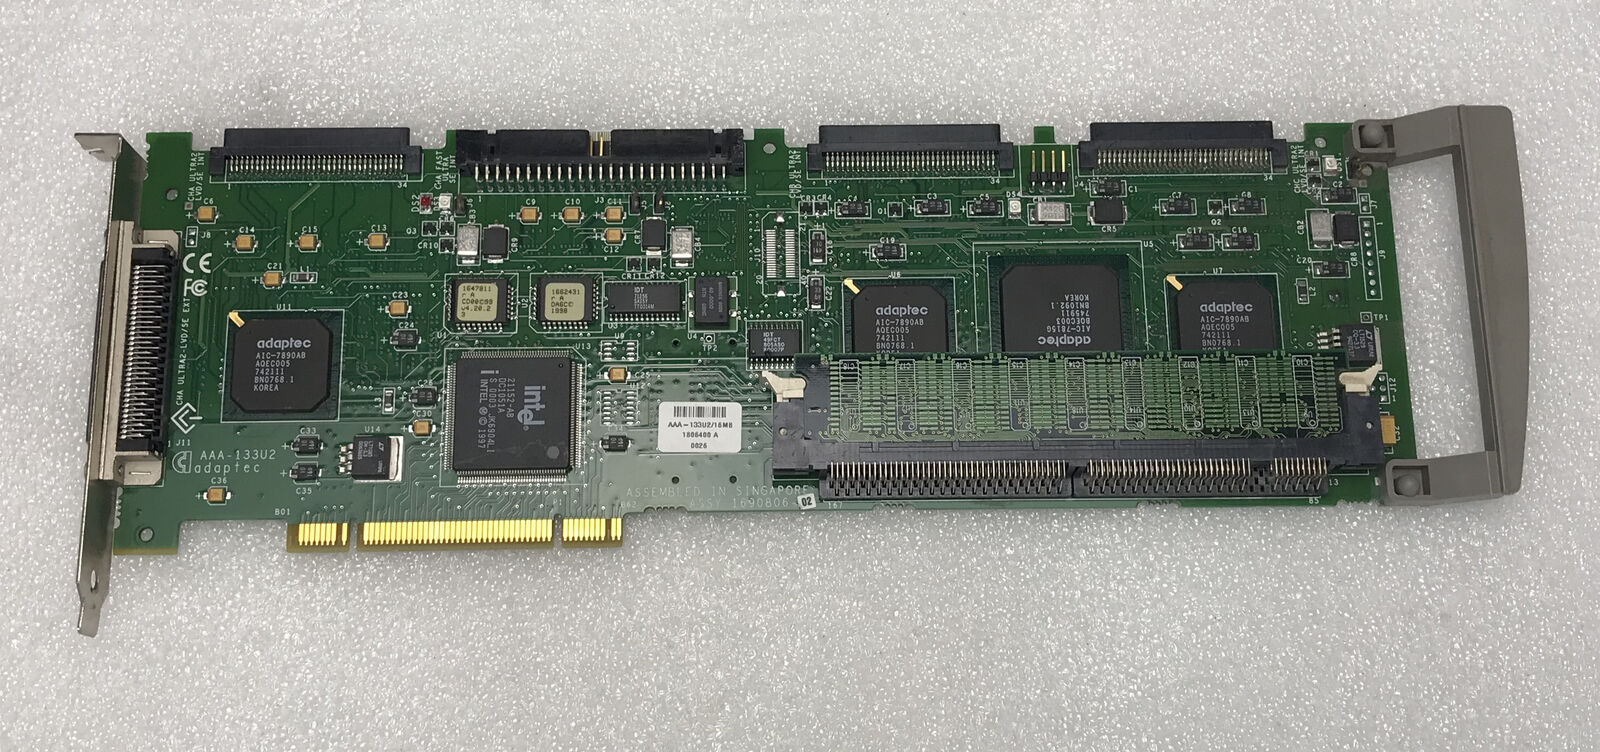 Adaptec AAA-133U2 Ultra2 SCSI 3-Channel PC Computer RAID Controller Card